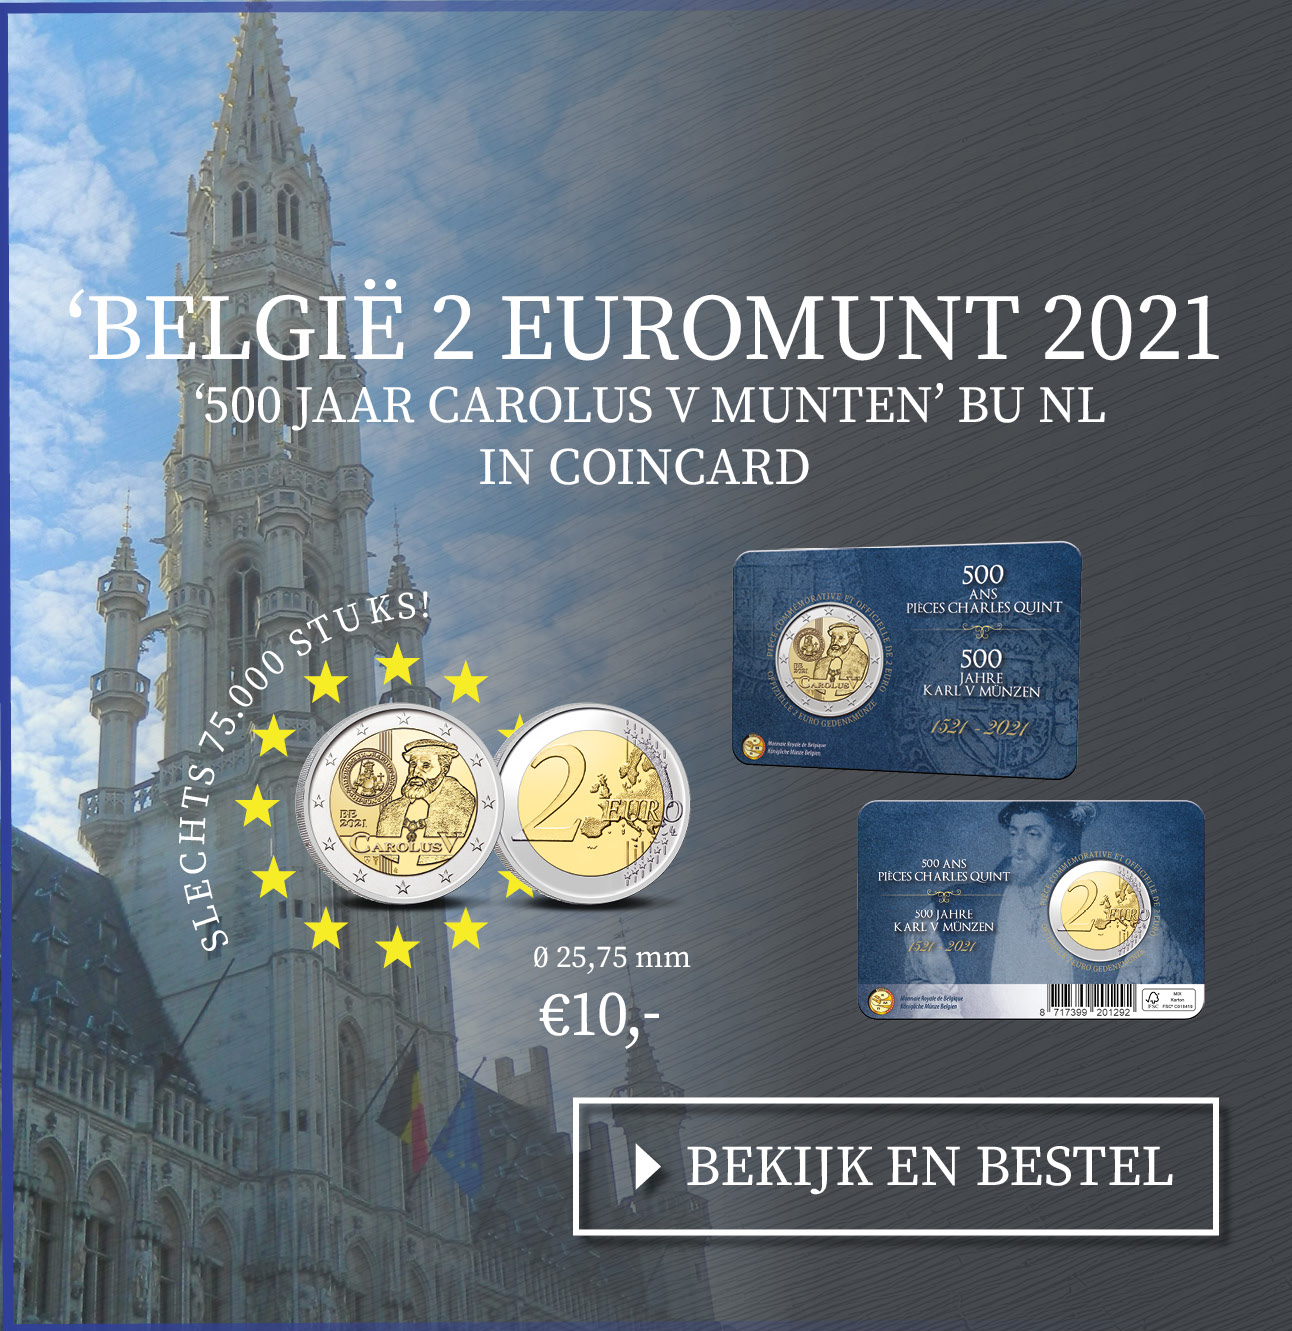 Bekijk en bestel: België 2 euromunt 2021 ‘500 jaar Carolus V munten’ BU in coincard NL